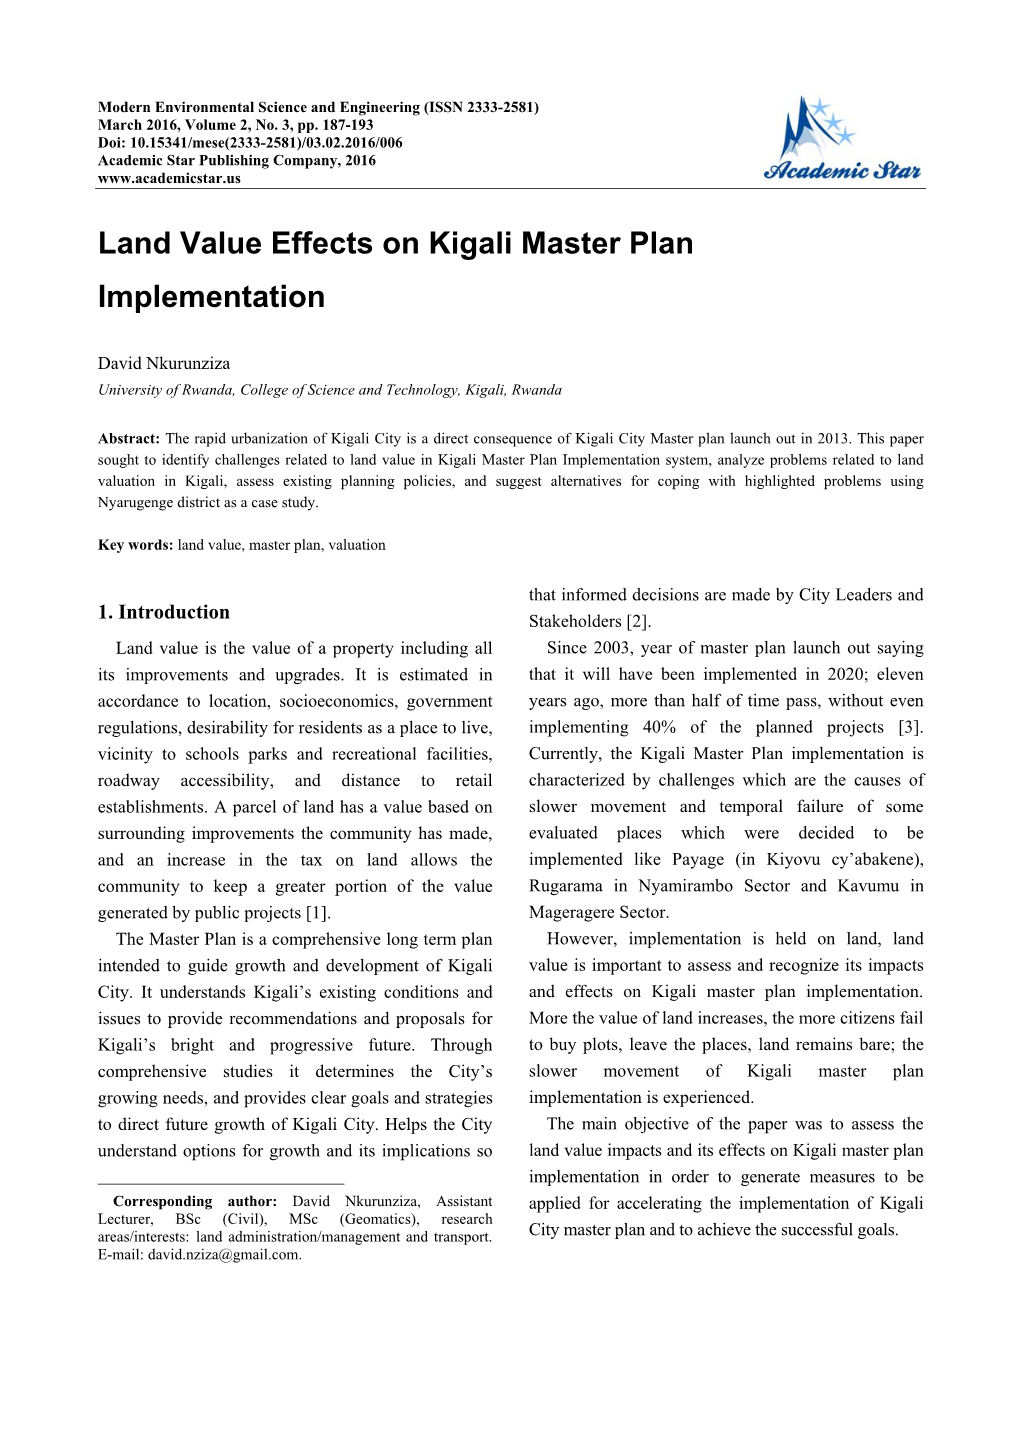 Land Value Effects on Kigali Master Plan Implementation